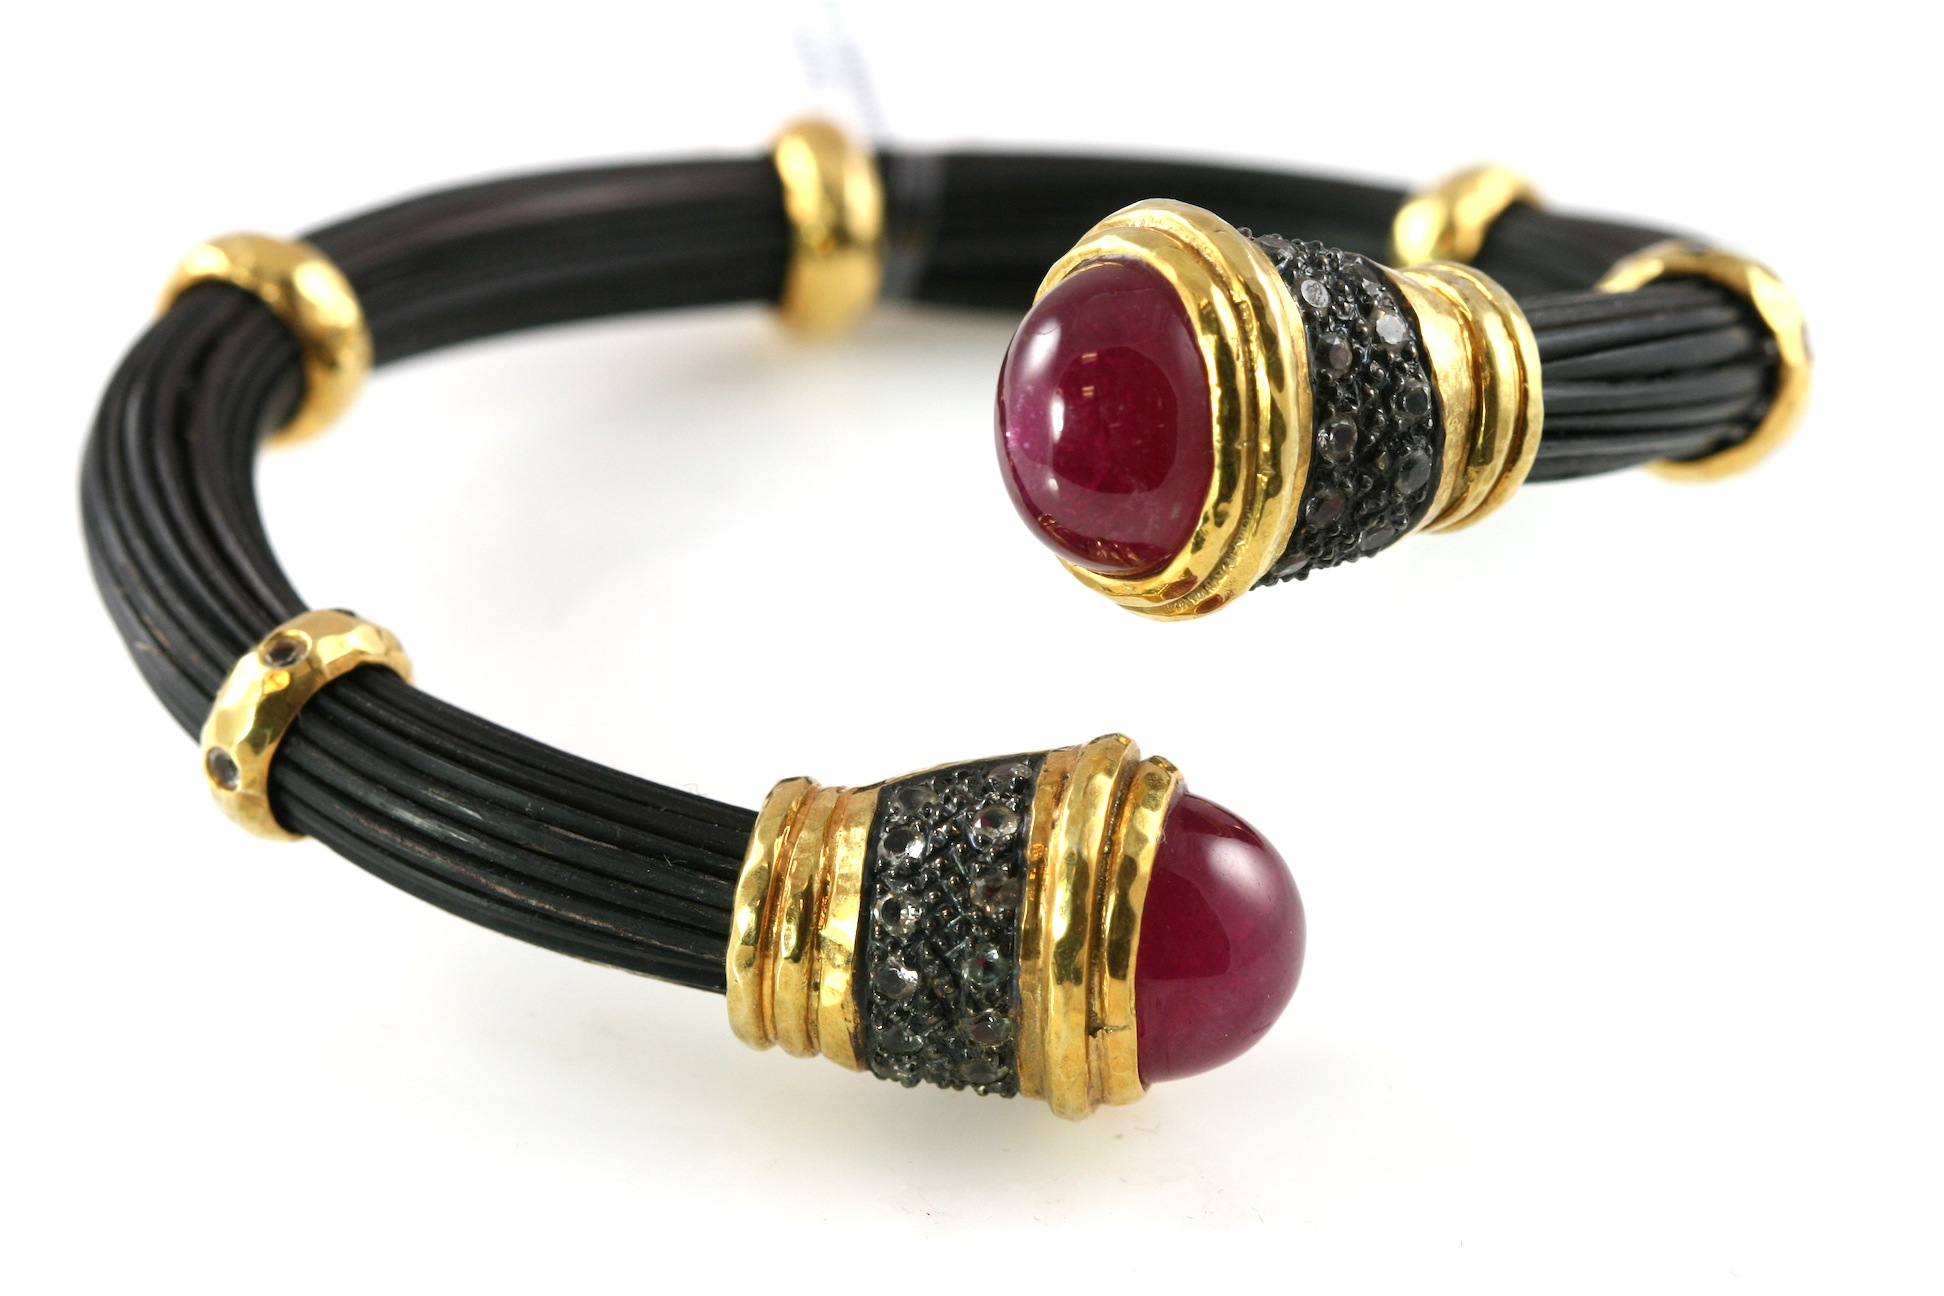 Elephant hair bracelets with beads elements